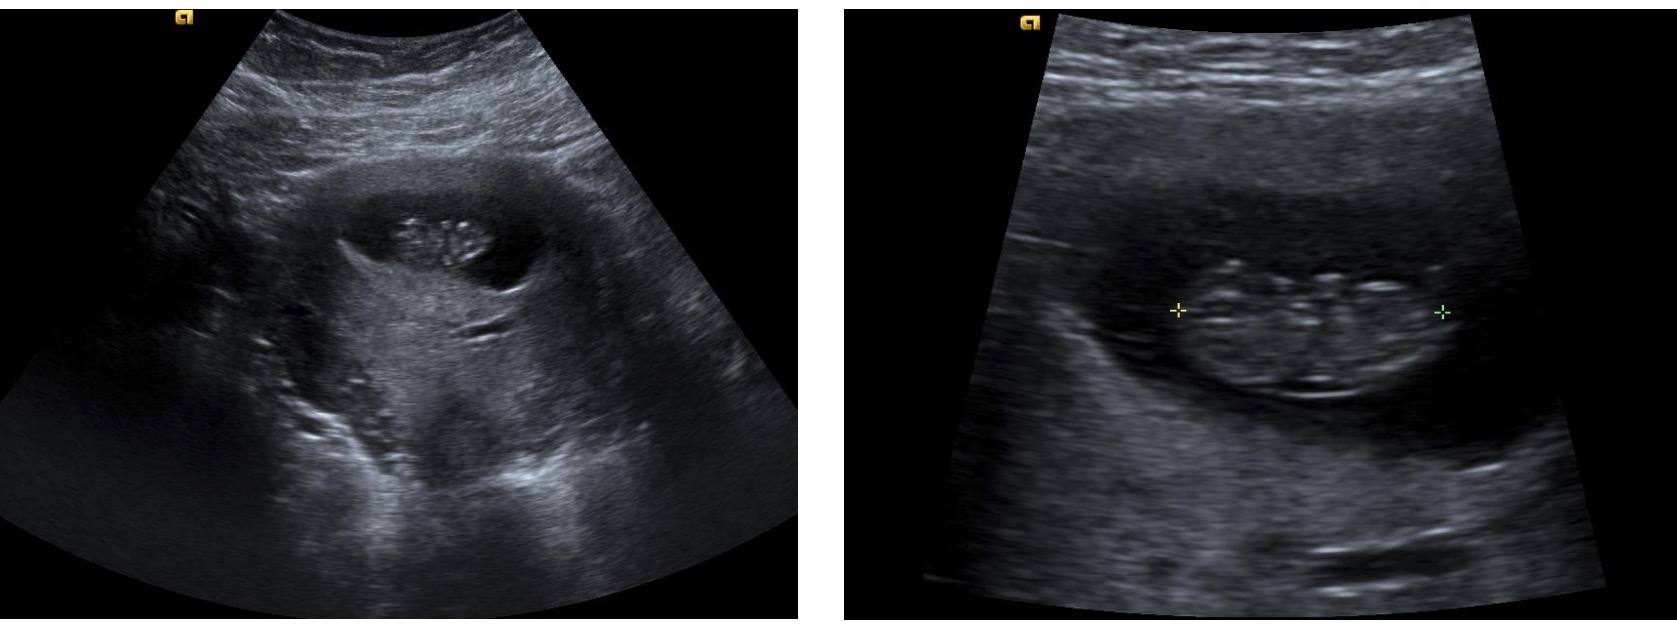 Intrauterine pregnancy within a gestational sac